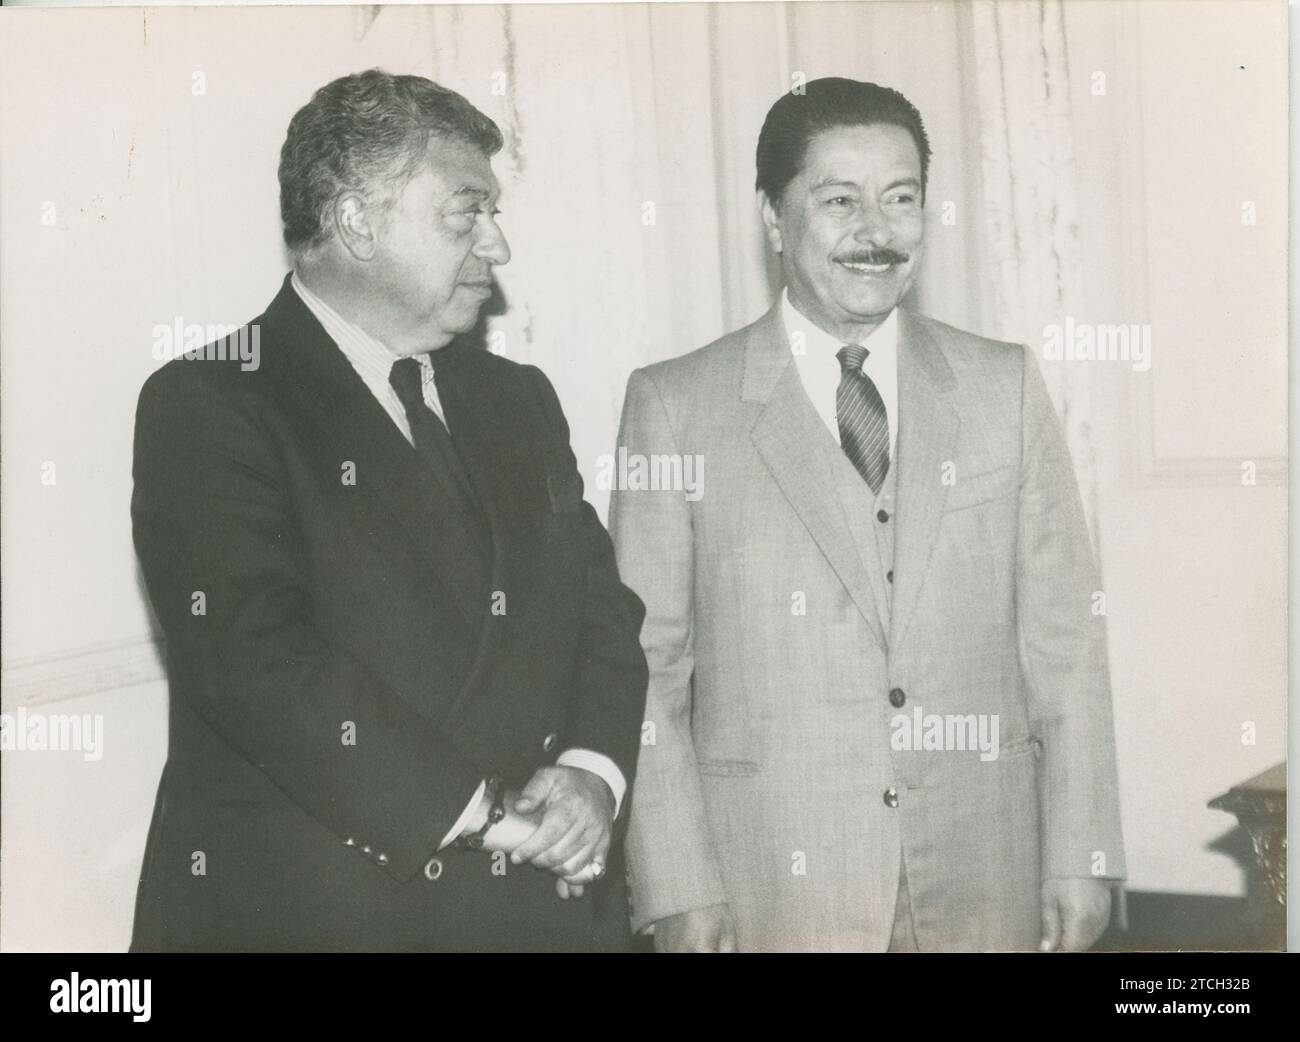 La Paz (Bolivia), 11/04/1988. Tico Medina interviews the vice president of Bolivia, Julio Garret Ayllón. Credit: Album / Archivo ABC Stock Photo